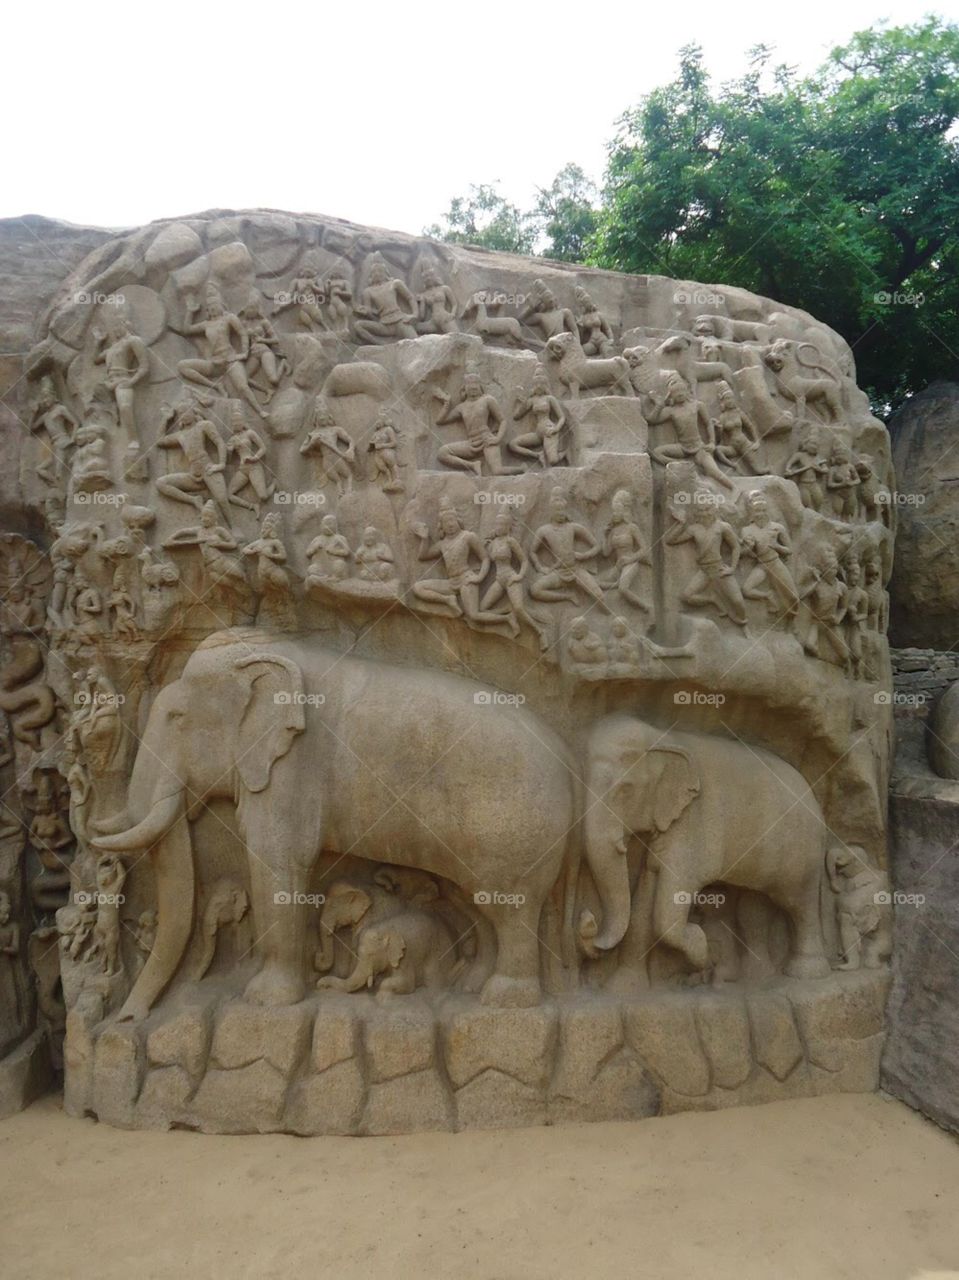 Elephants sculpted on the rock